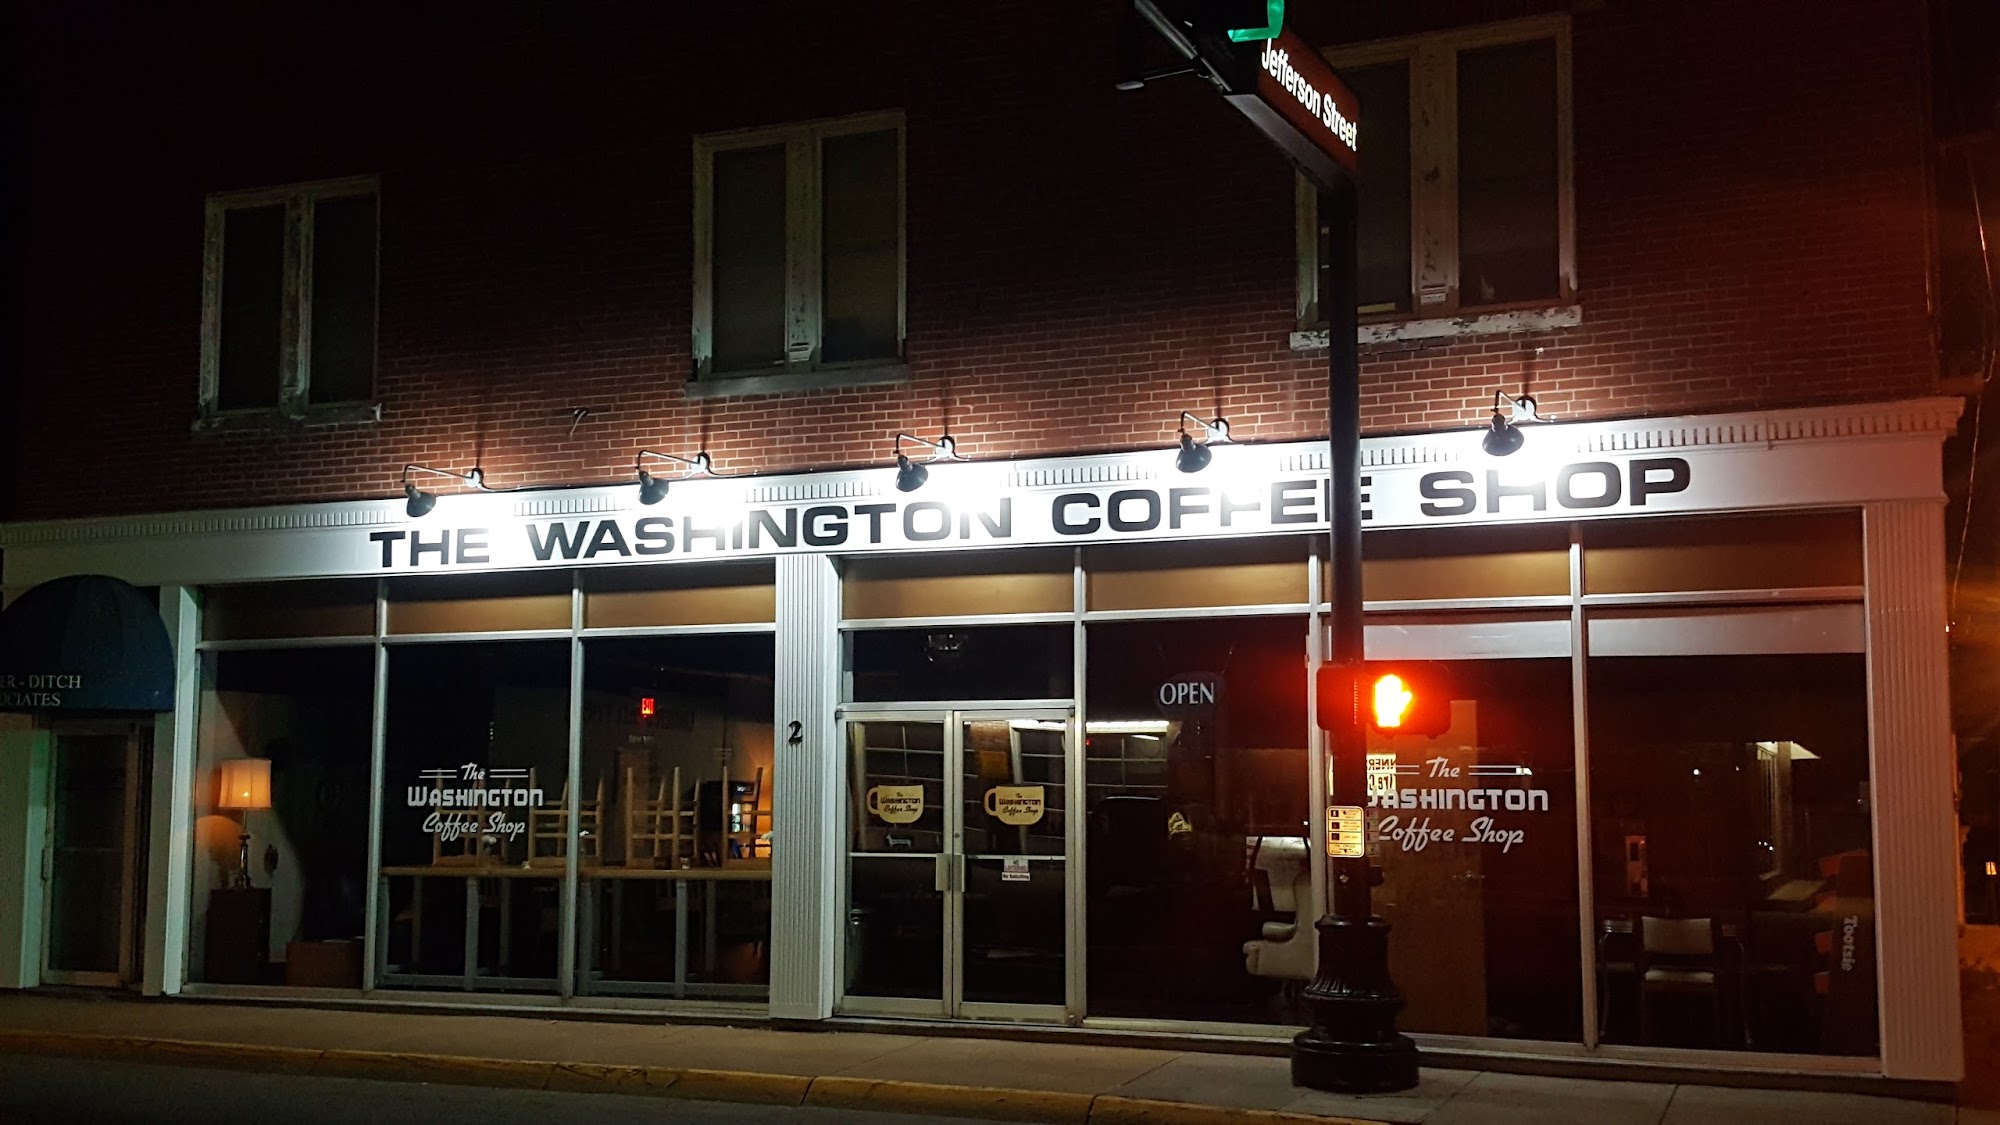 The Washington Coffee Shop